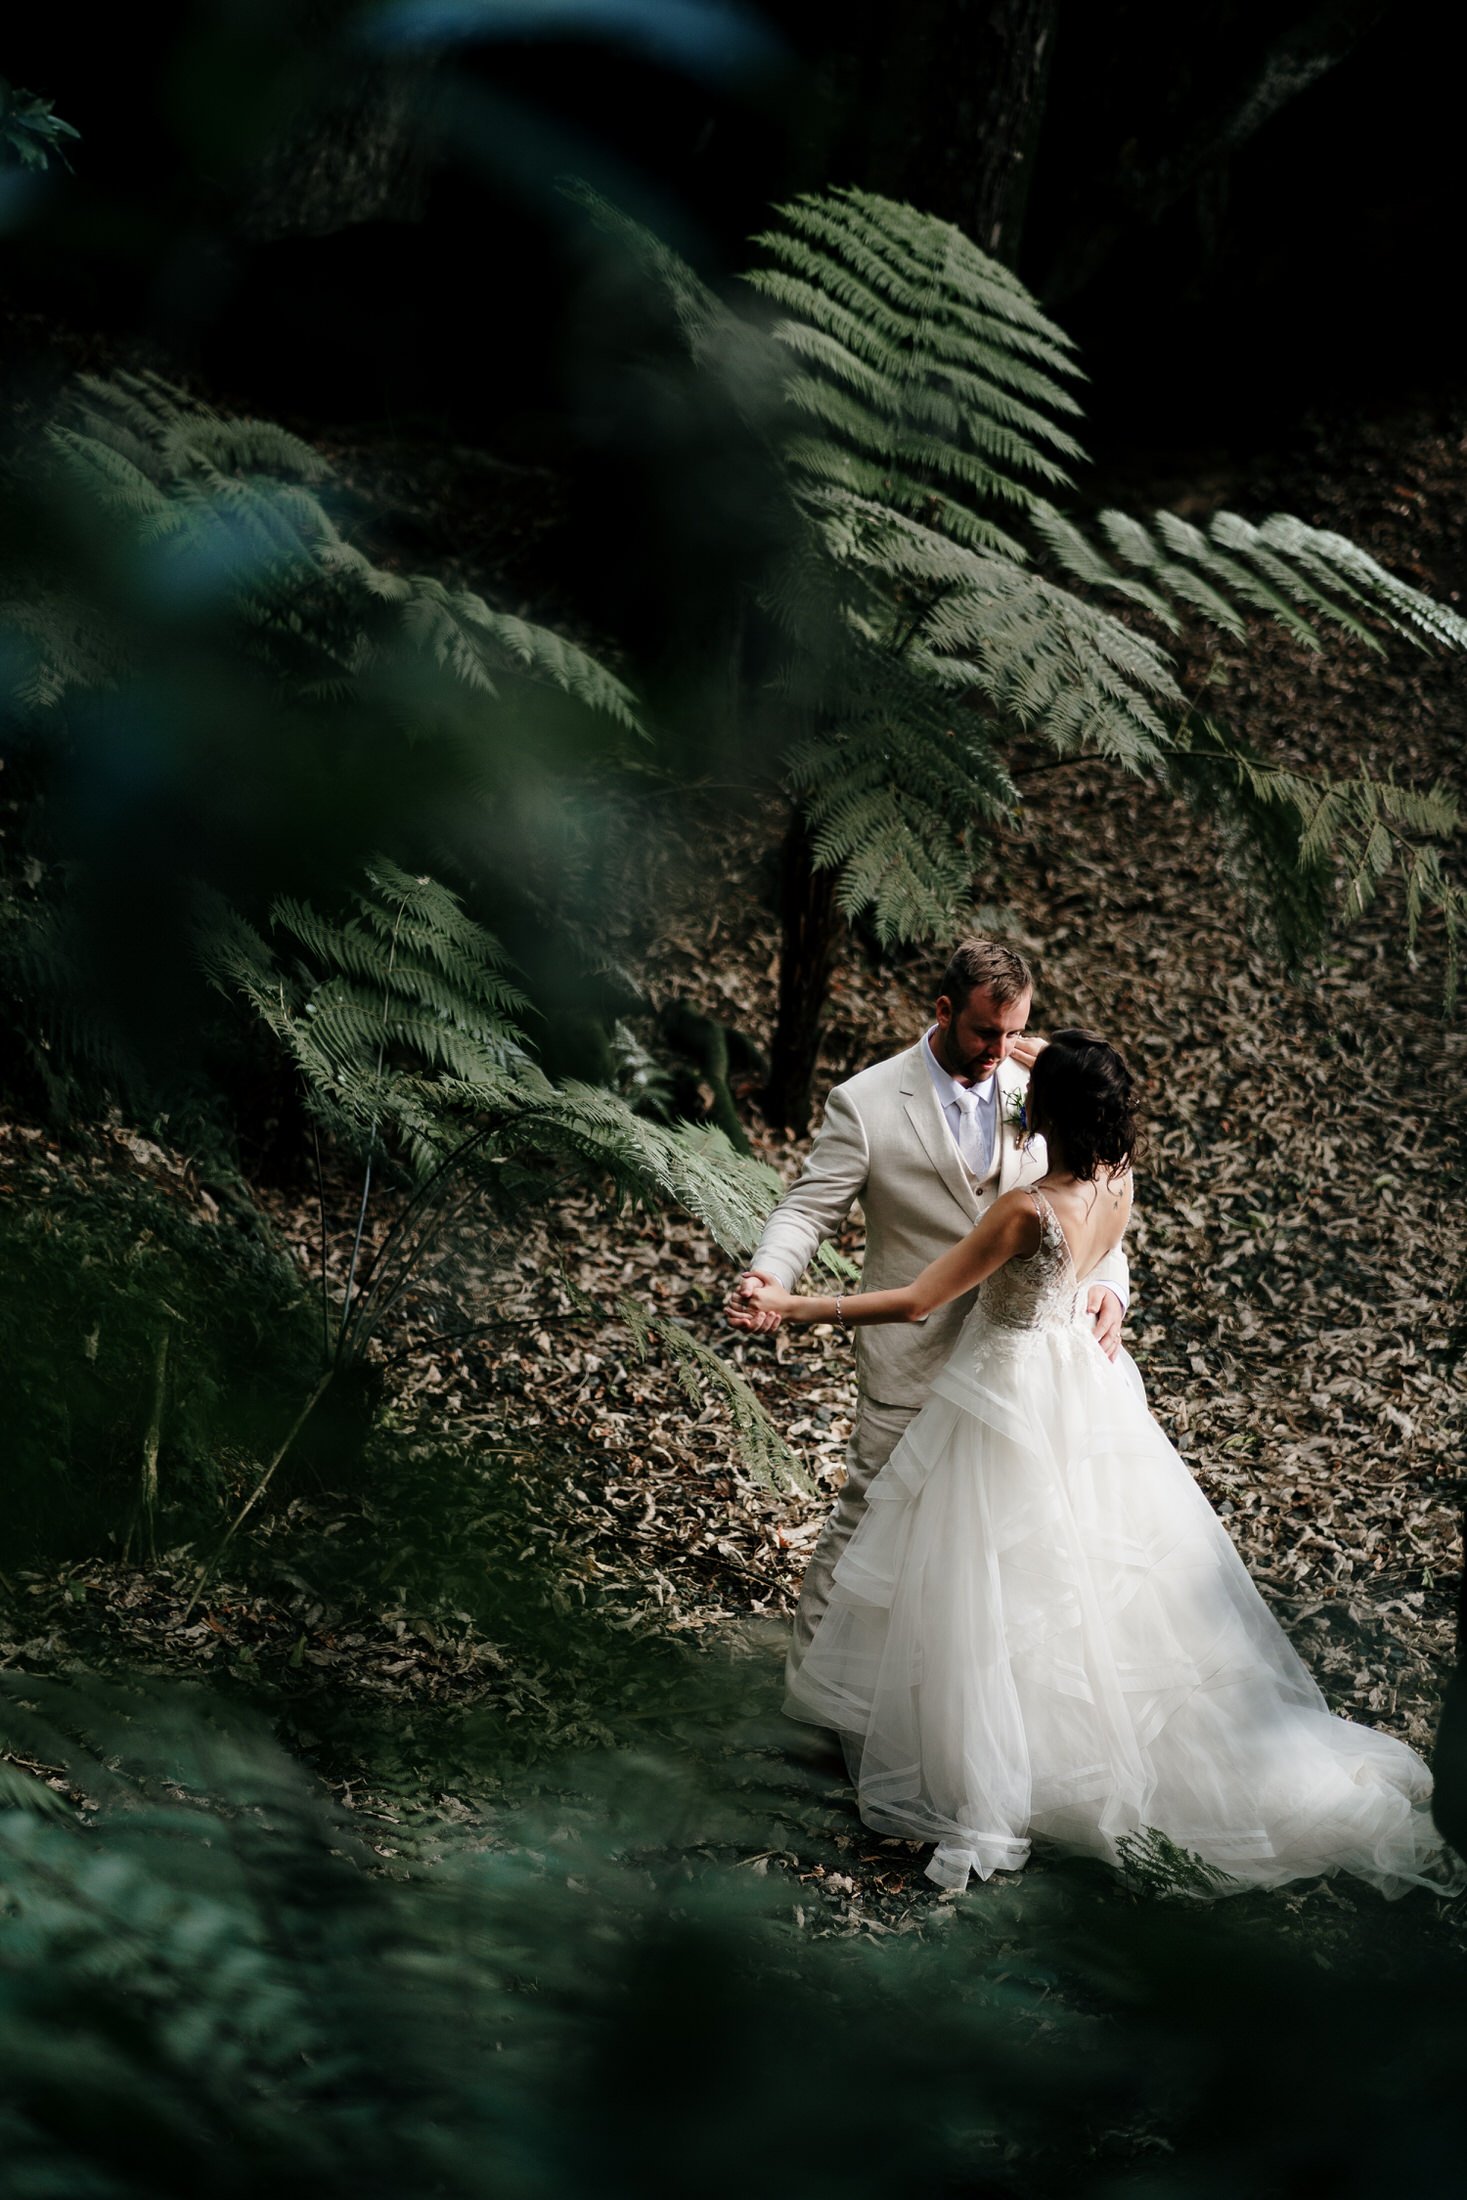 Astral-bridal-wedding-gown-photographer-auckland-videographer-farm-rustic (7).jpg